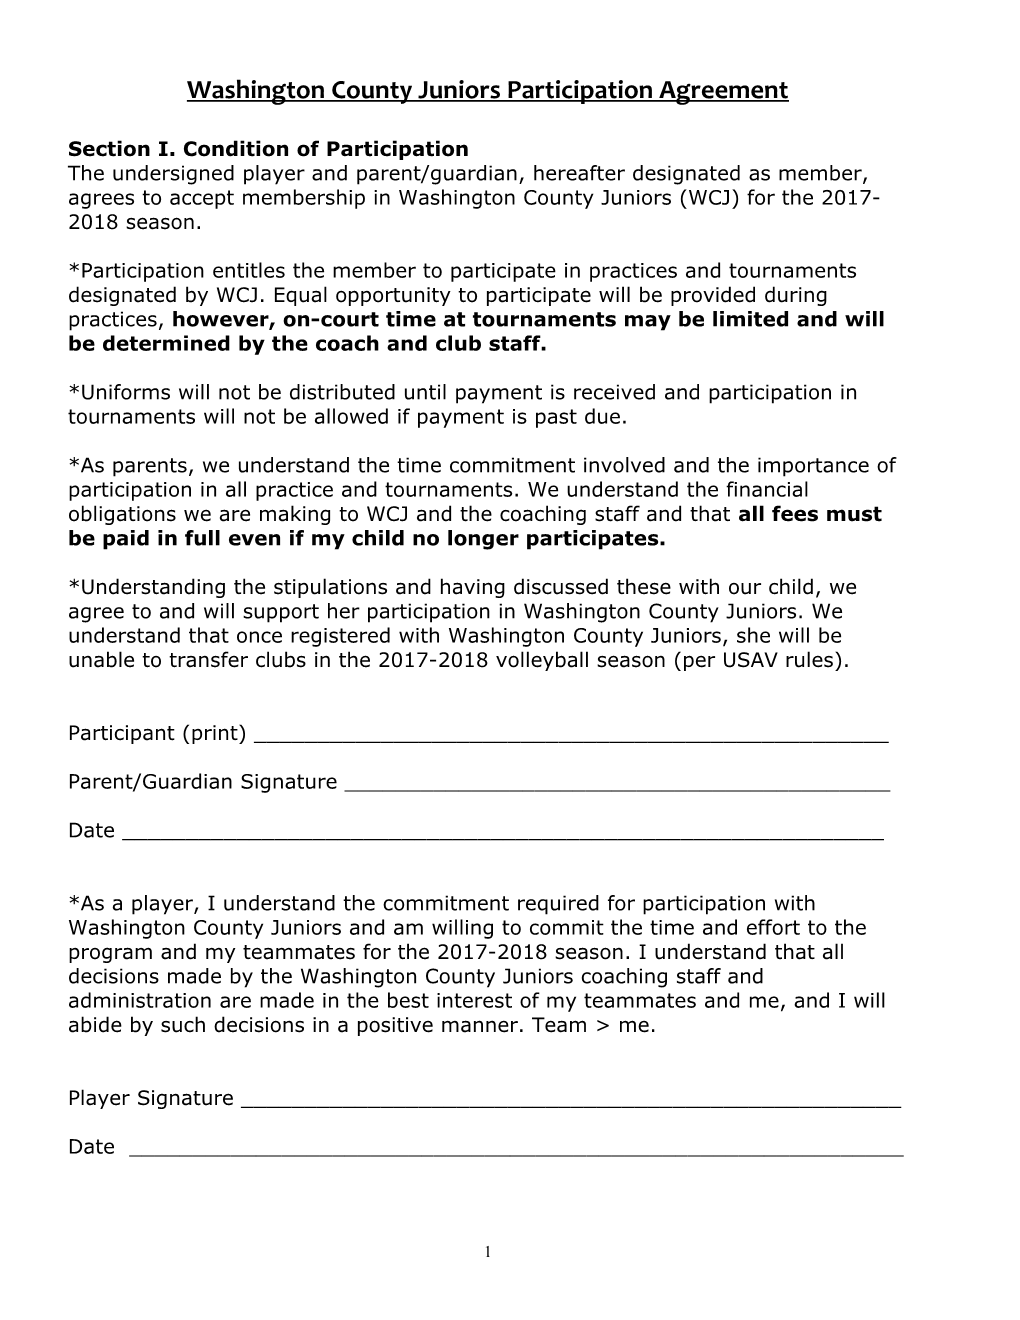 Brazos Valley Juniors Participation Agreement